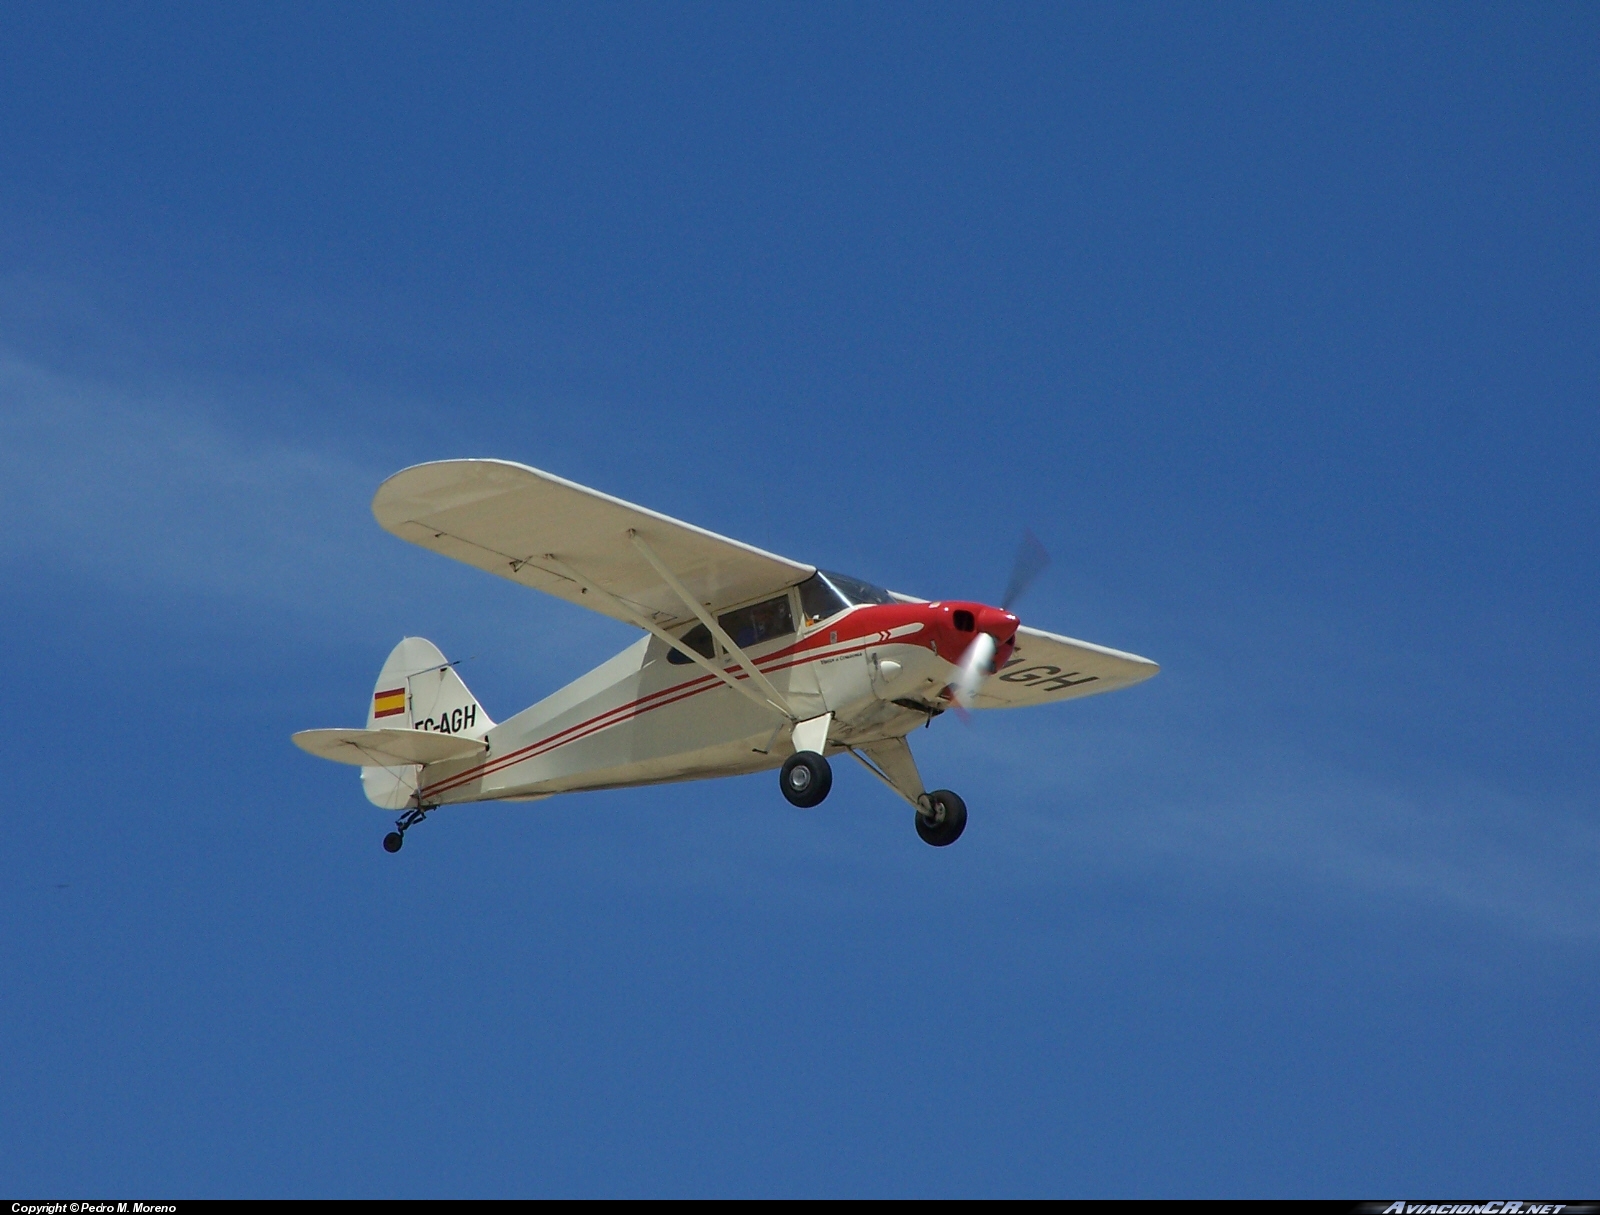 EC-AGH - Piper PA-20 Pacer - FIO (Fundacion Infante de Orleans)